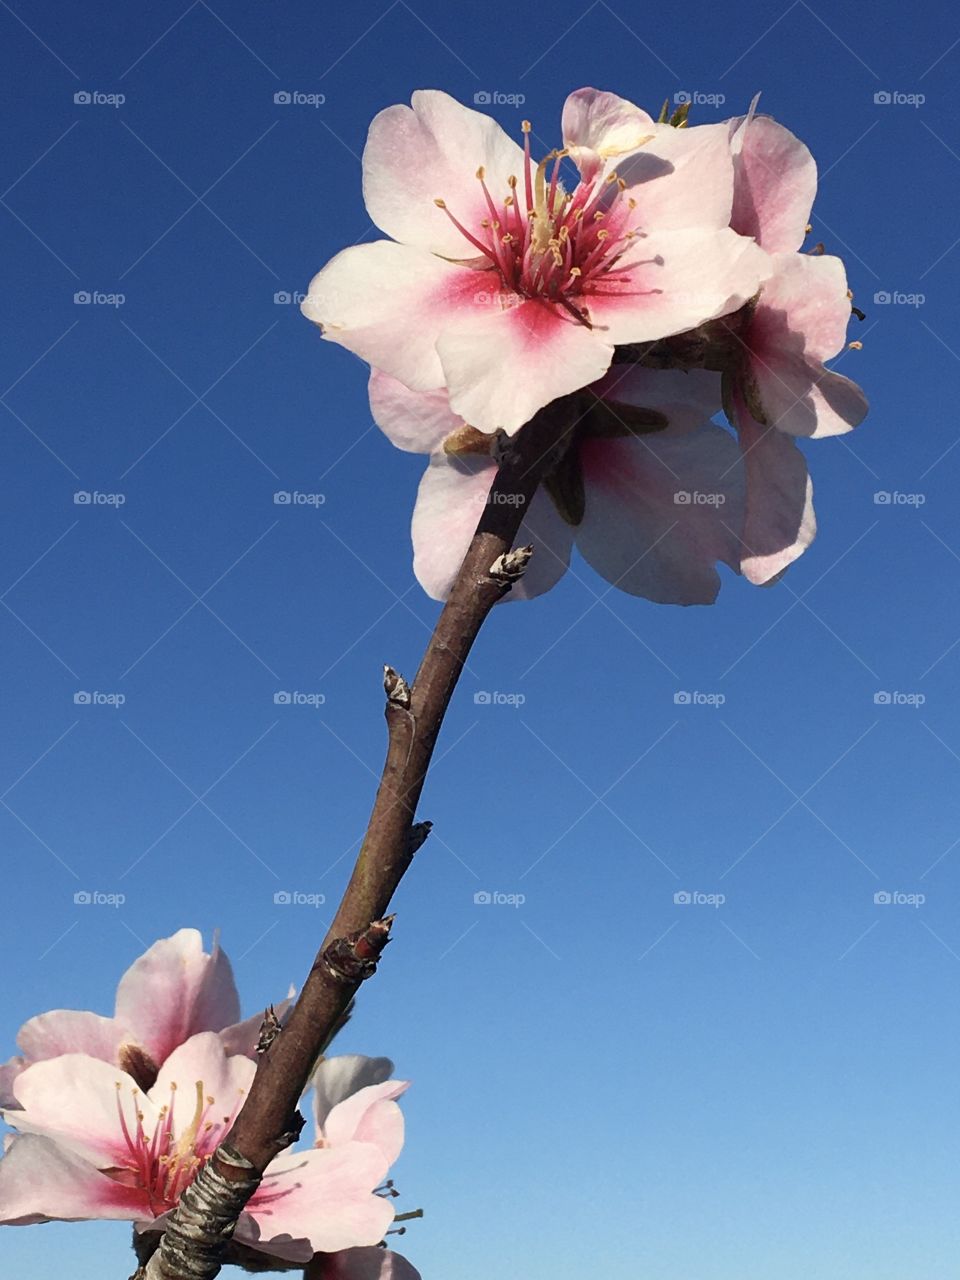 Almond tree flowers on blue sky